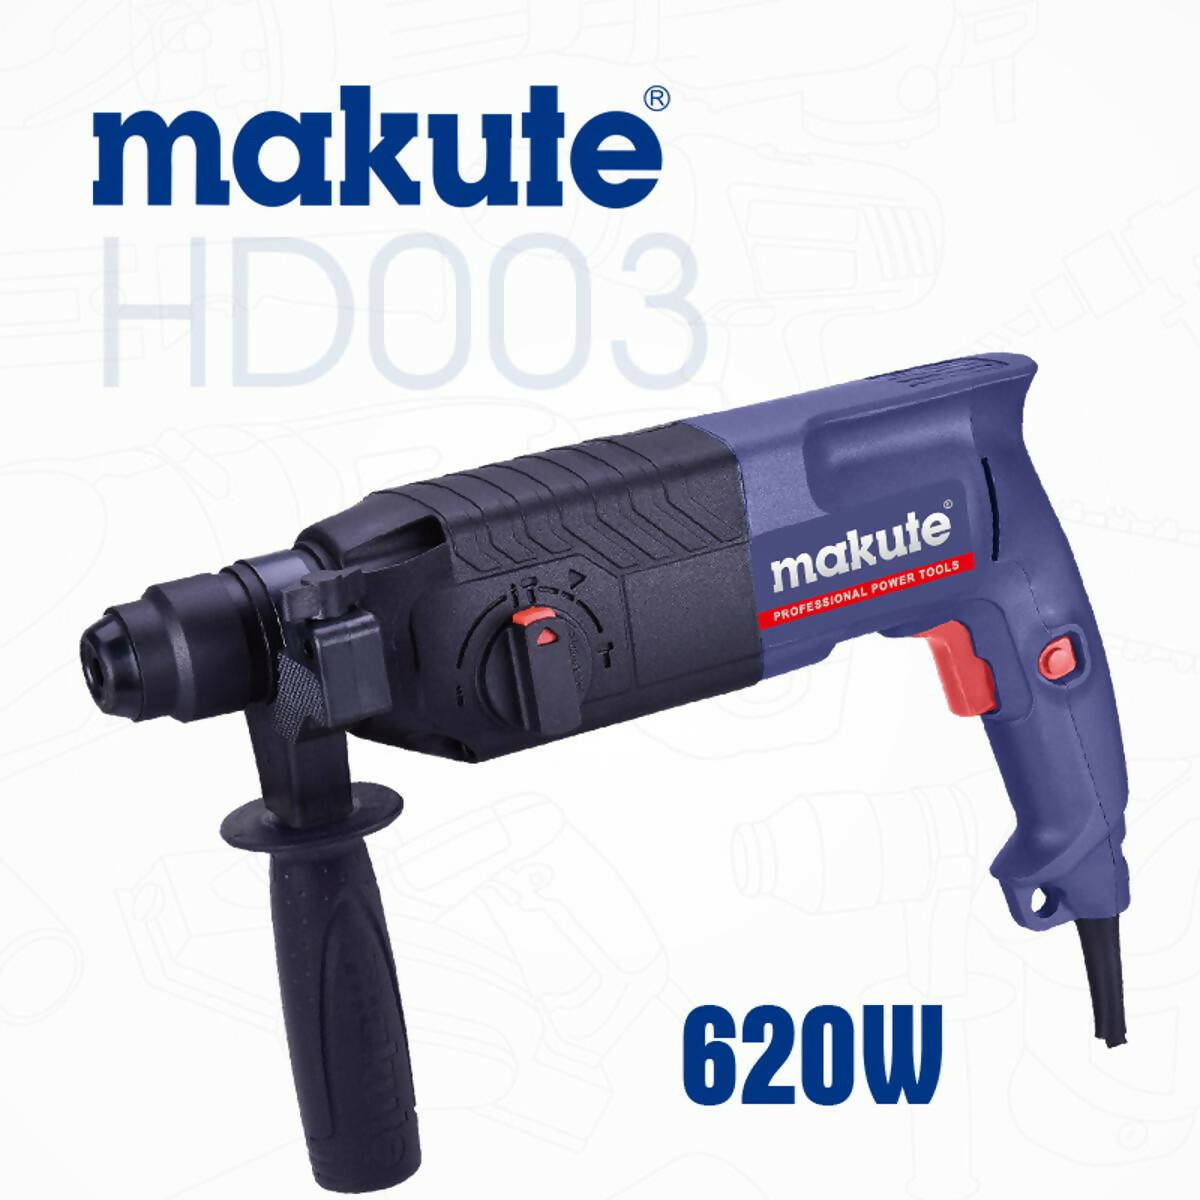 Makute Hd003 24mm Hilti Drill 620watts - 100% Copper